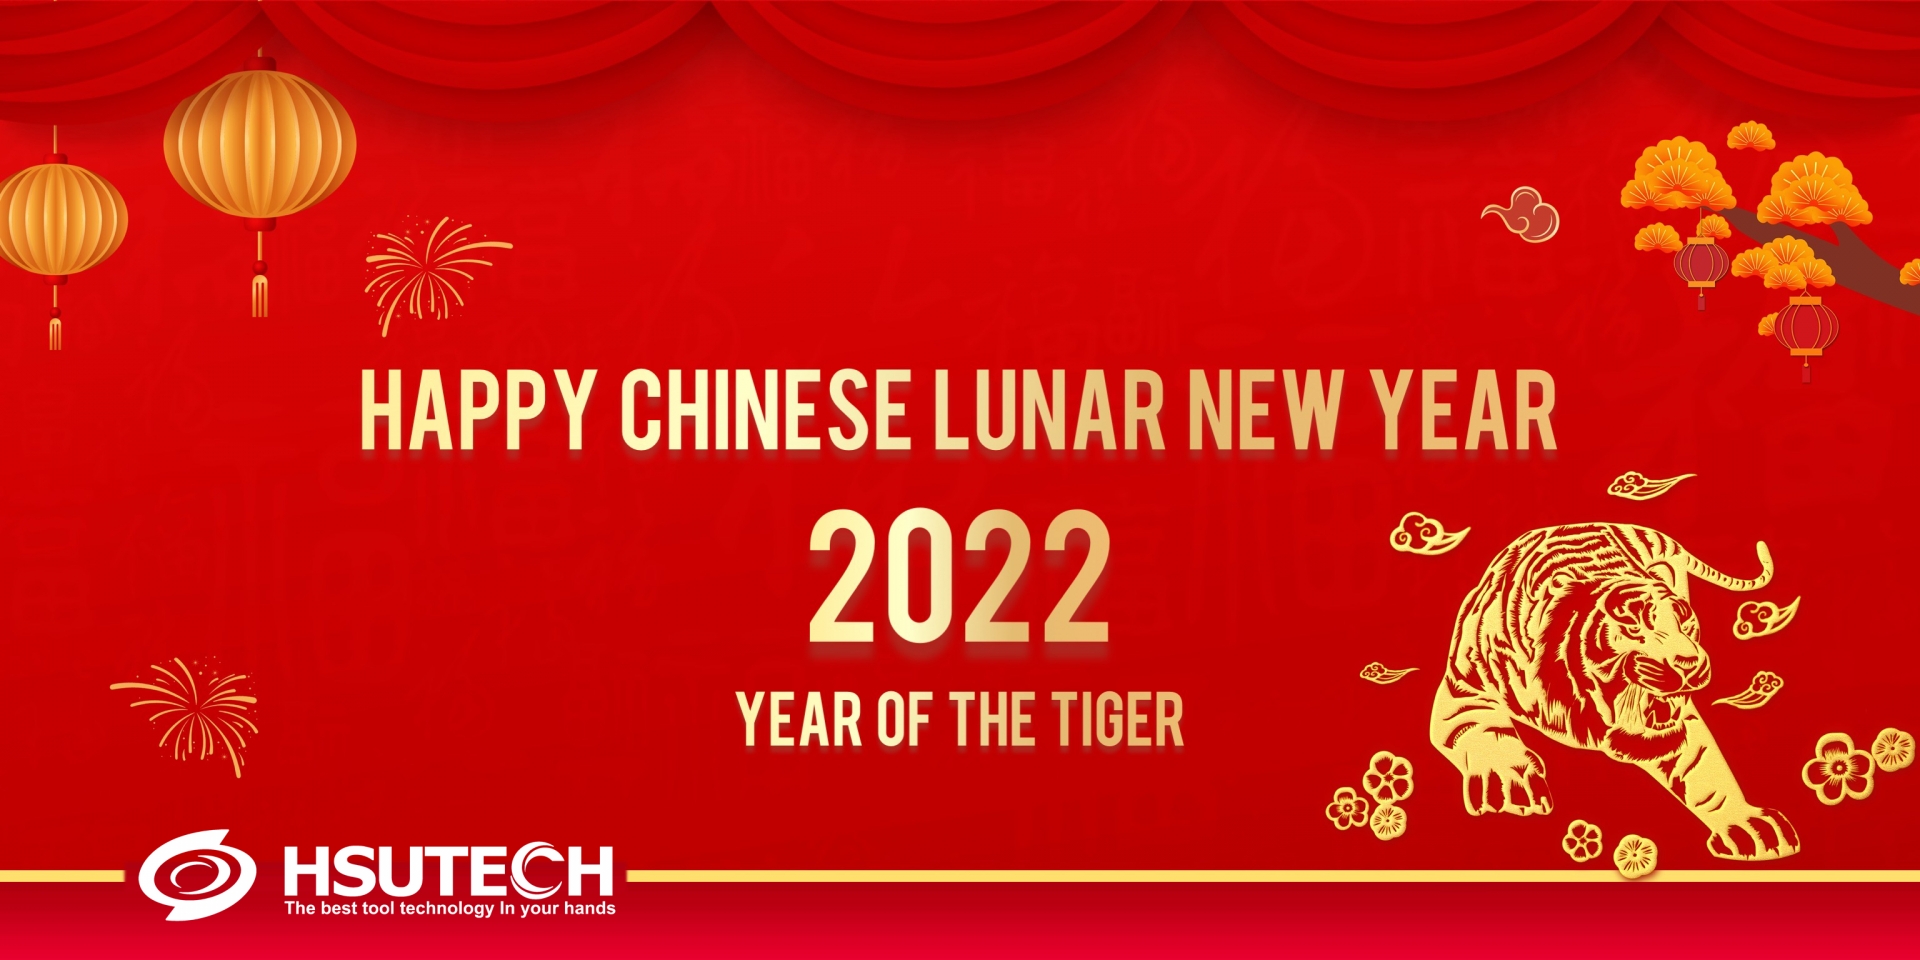 HAPPY CHINESE NEW YEAR 2022